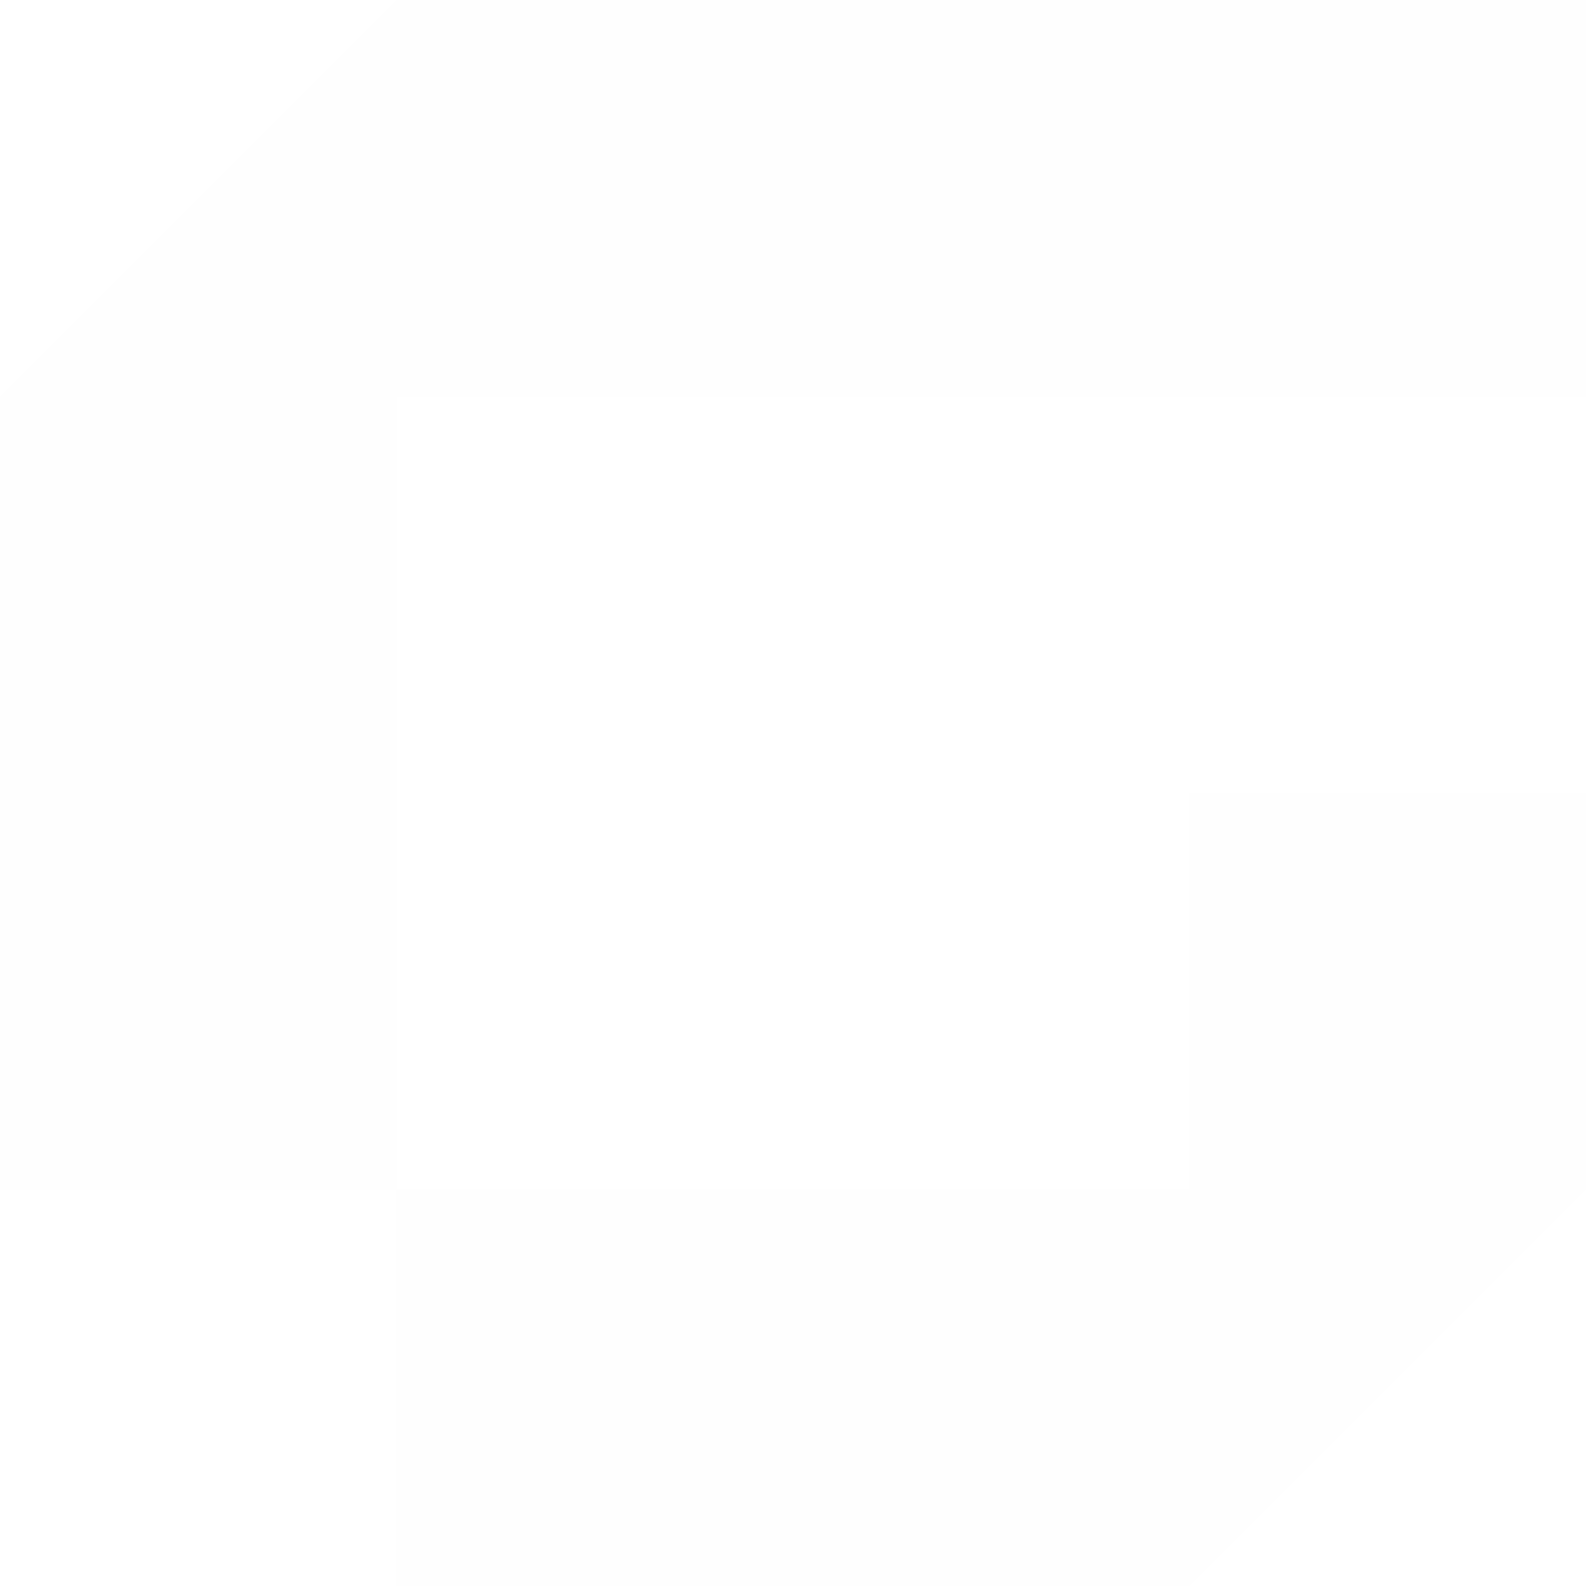 genznodes-white-image-logo